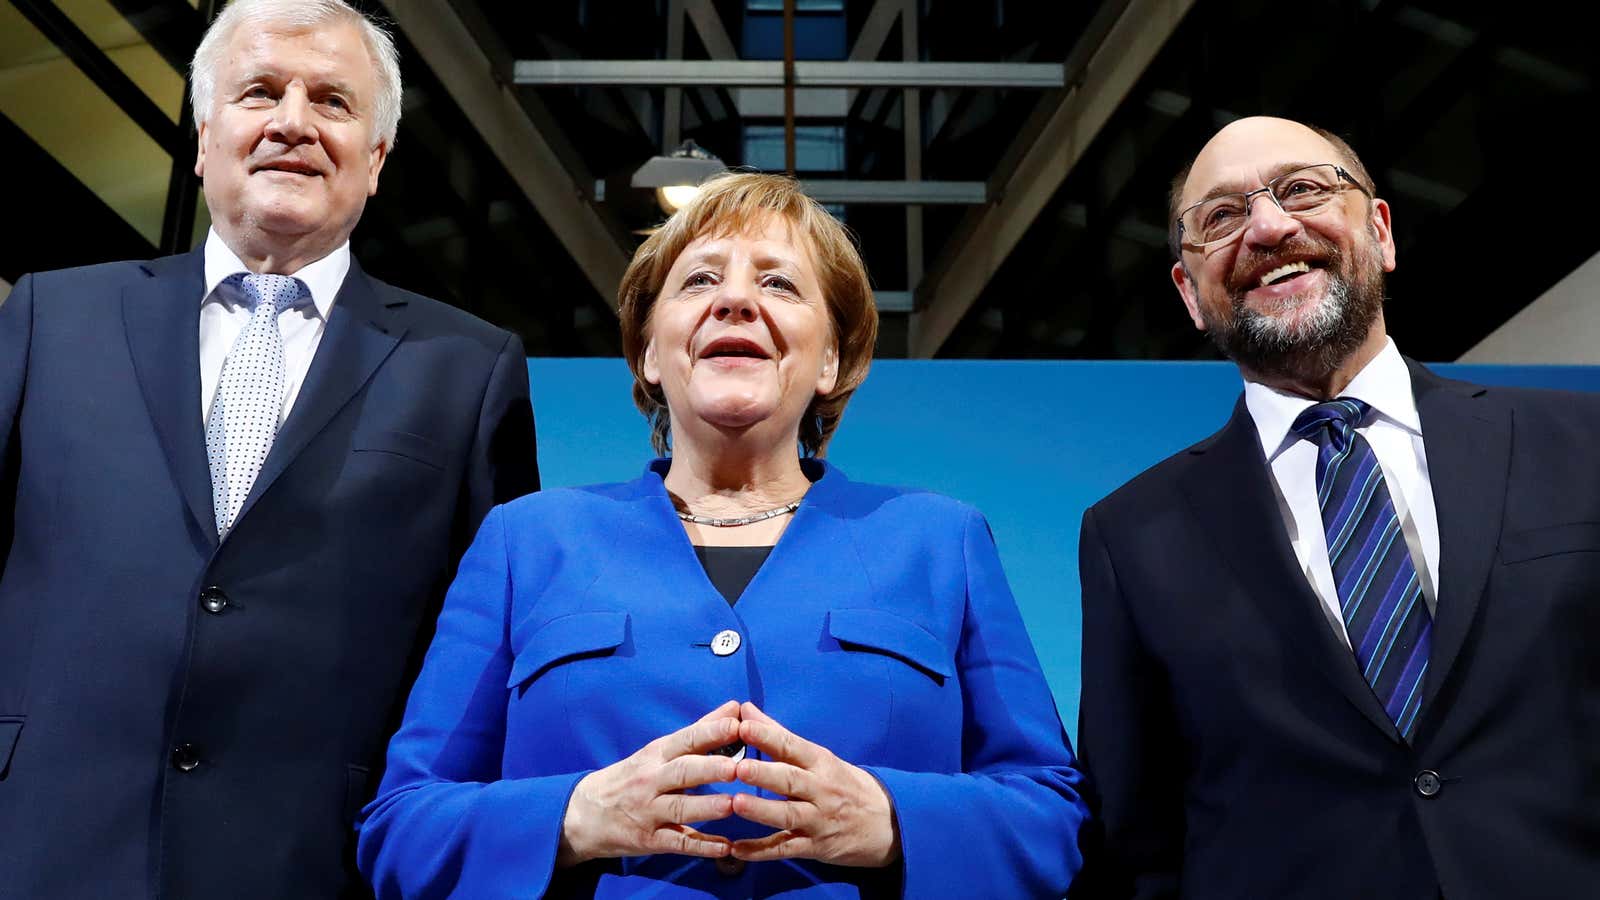 The big three: Angela Merkel, Horst Seehofer of sister CSU party, and  Social Democratic Party head Martin Schulz